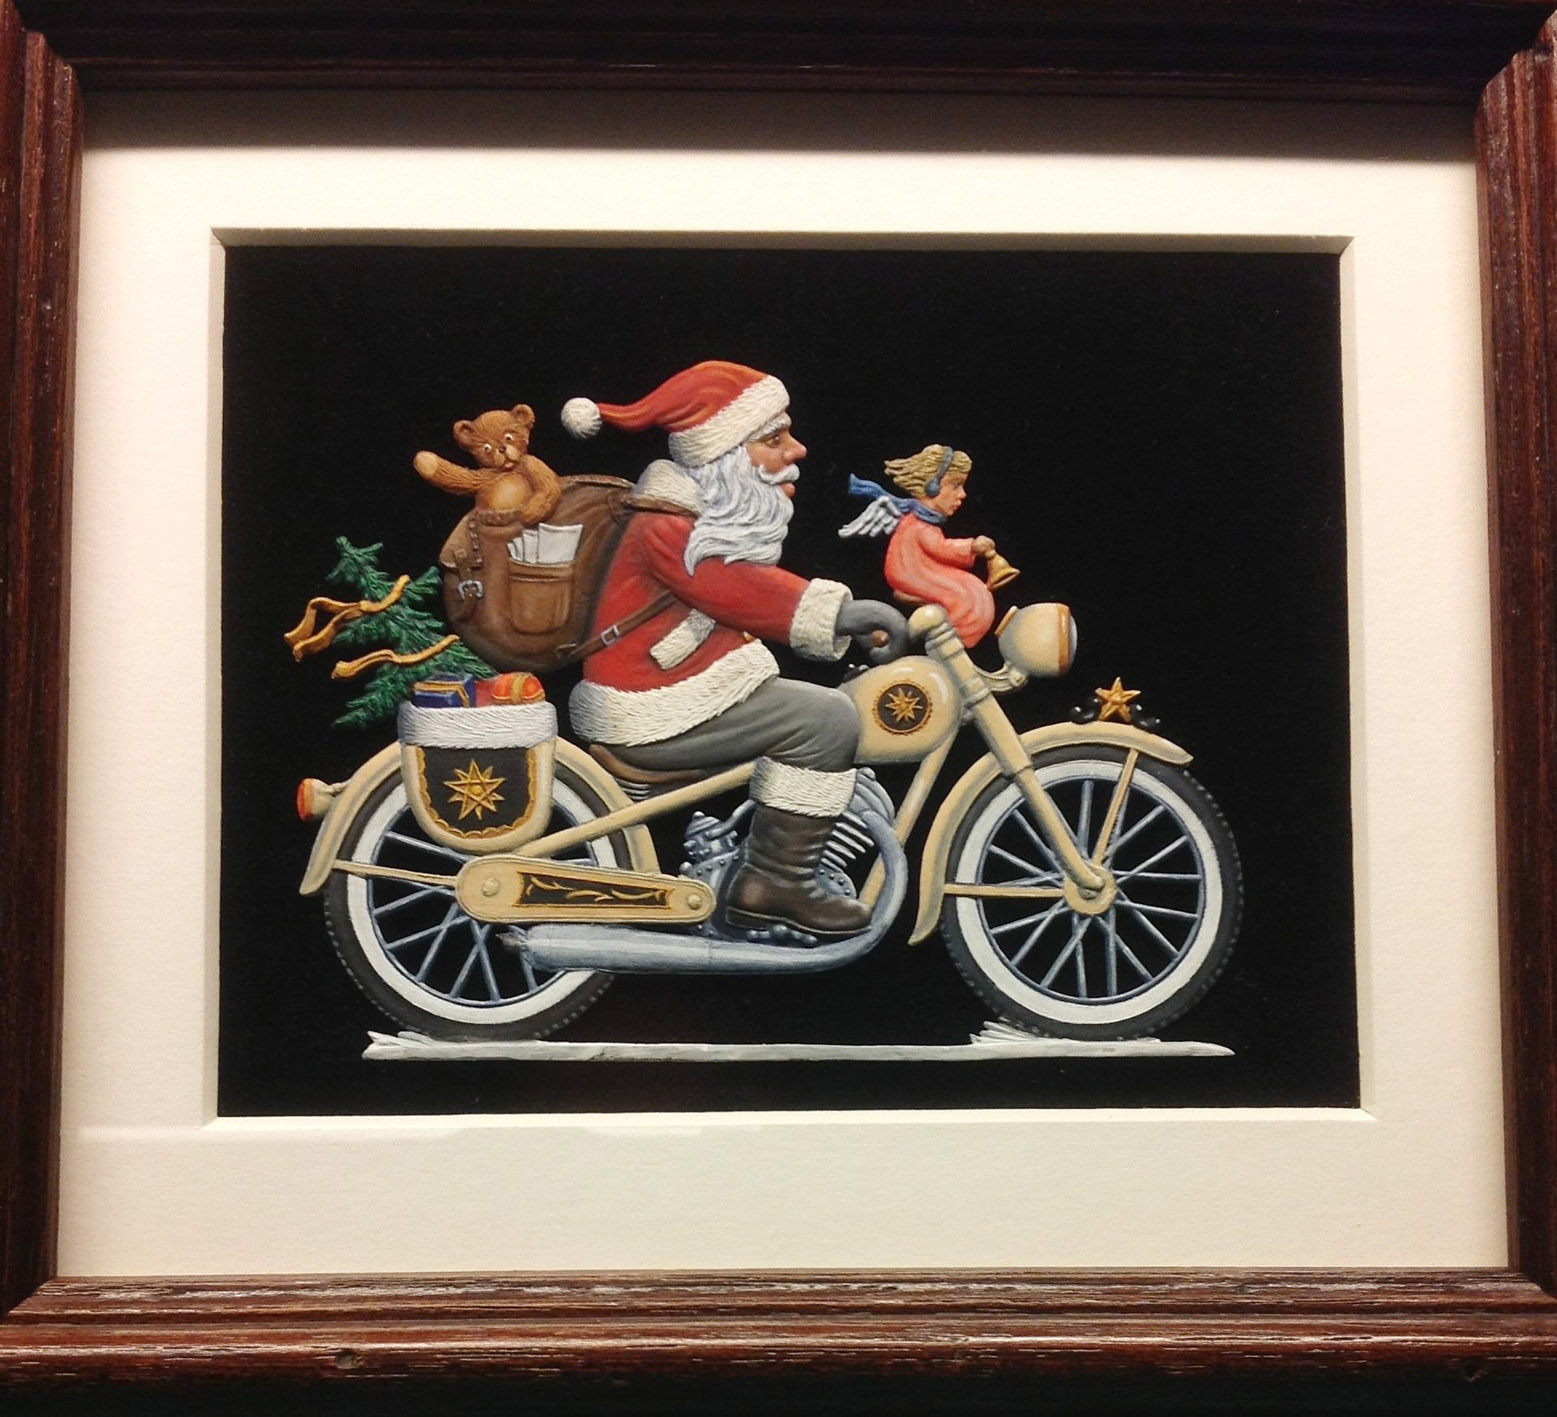 Julemand-på-motorcykel-flad